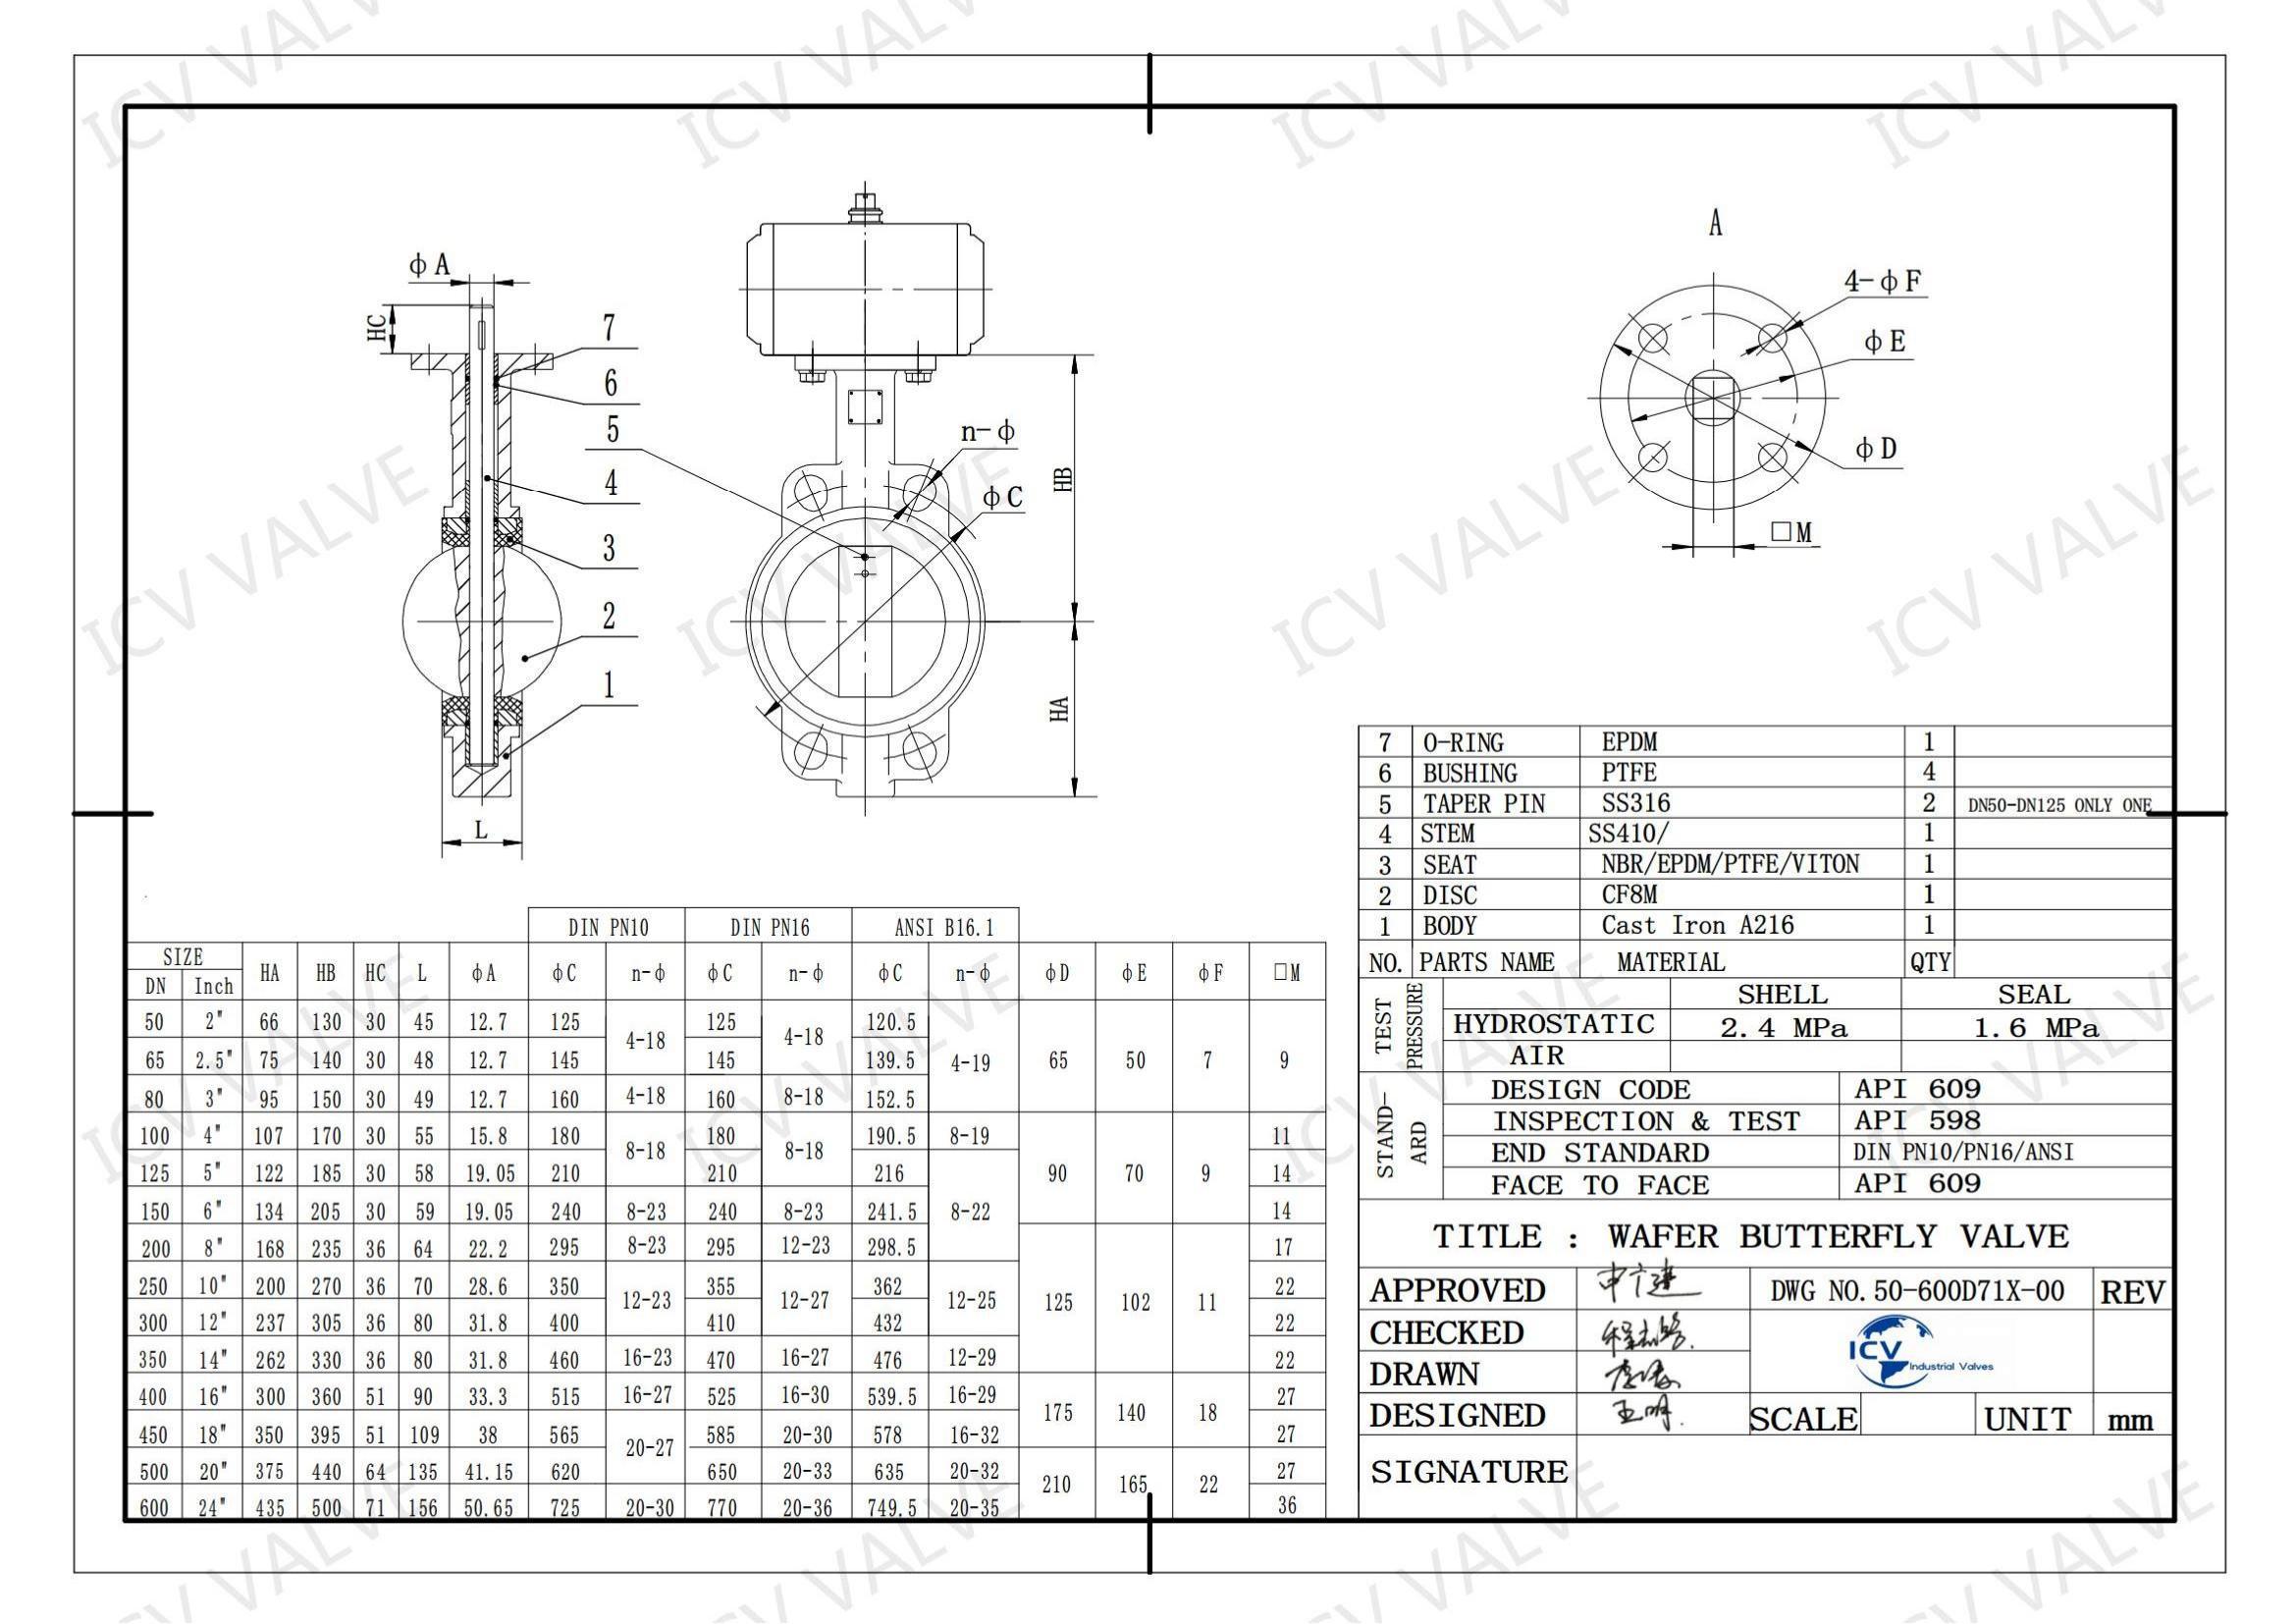 ICV VALVE - pneumatic actuator butterfly valve